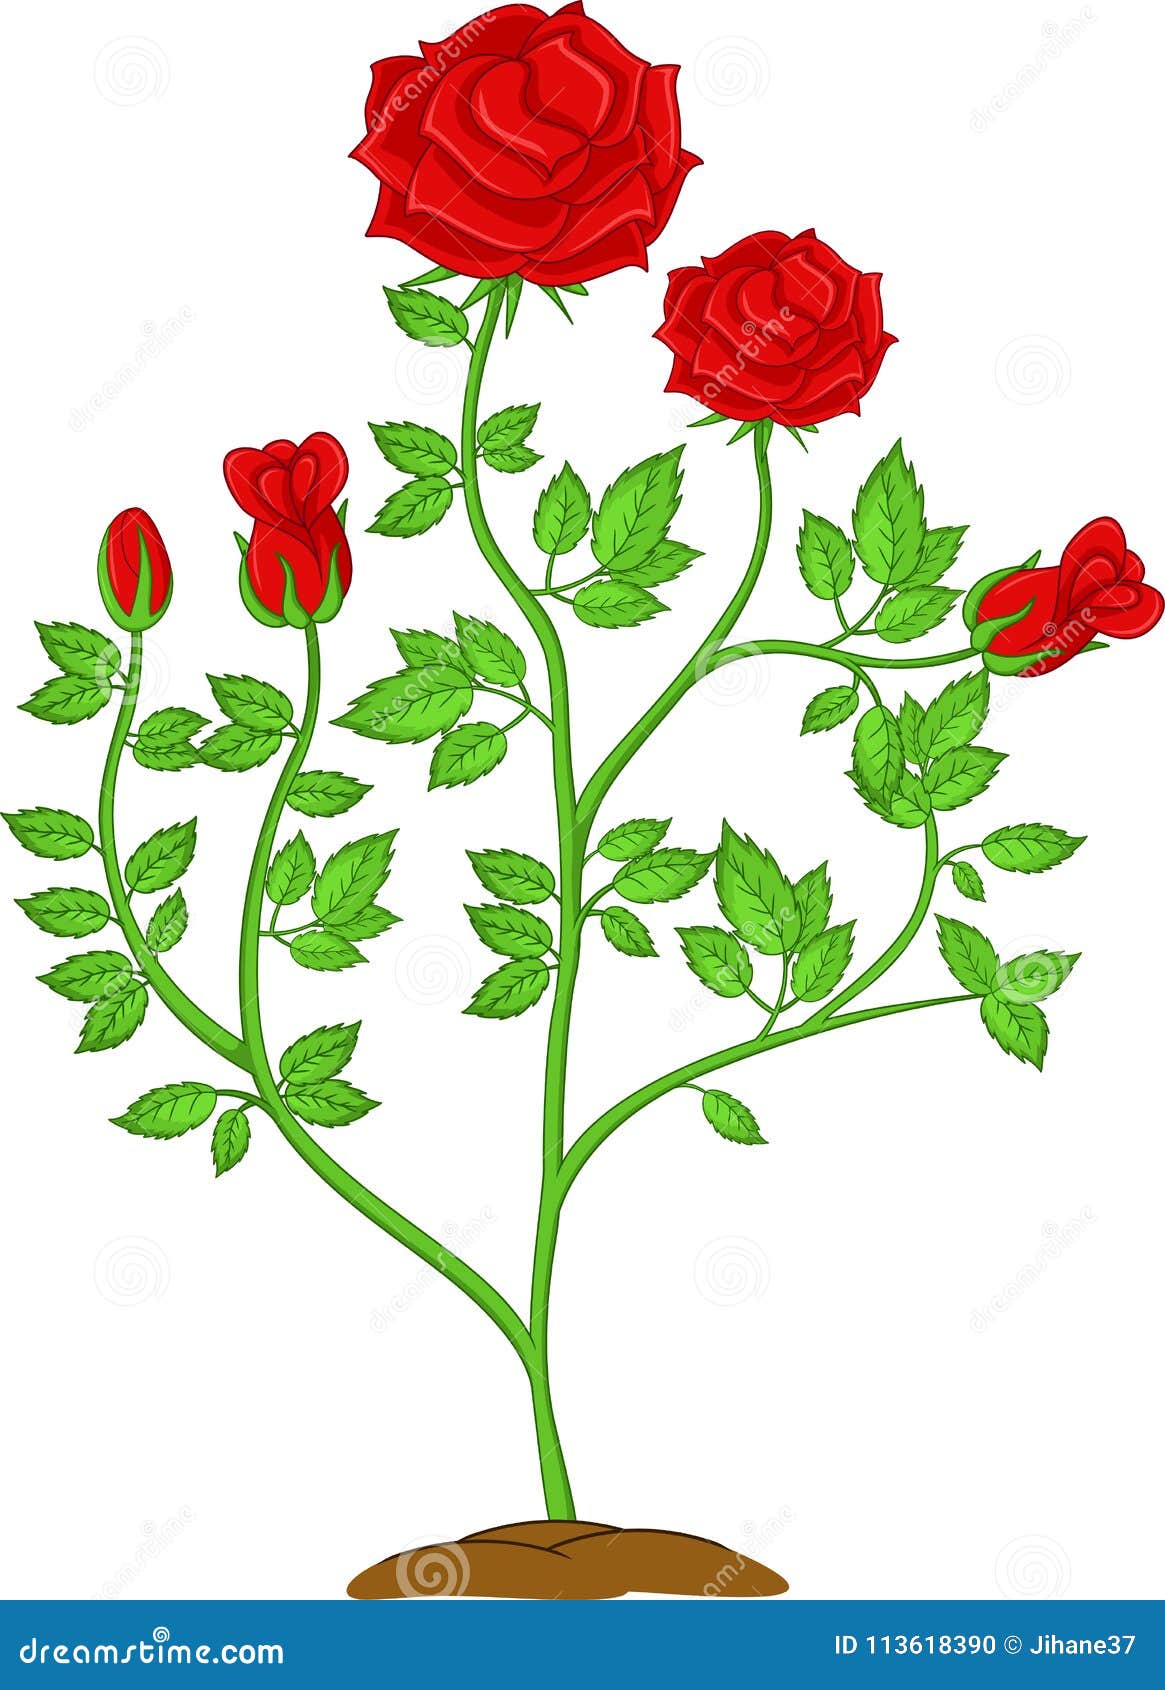 Cute Flower Rose Cartoon on White Background Stock Illustration -  Illustration of floral, clip: 113618390